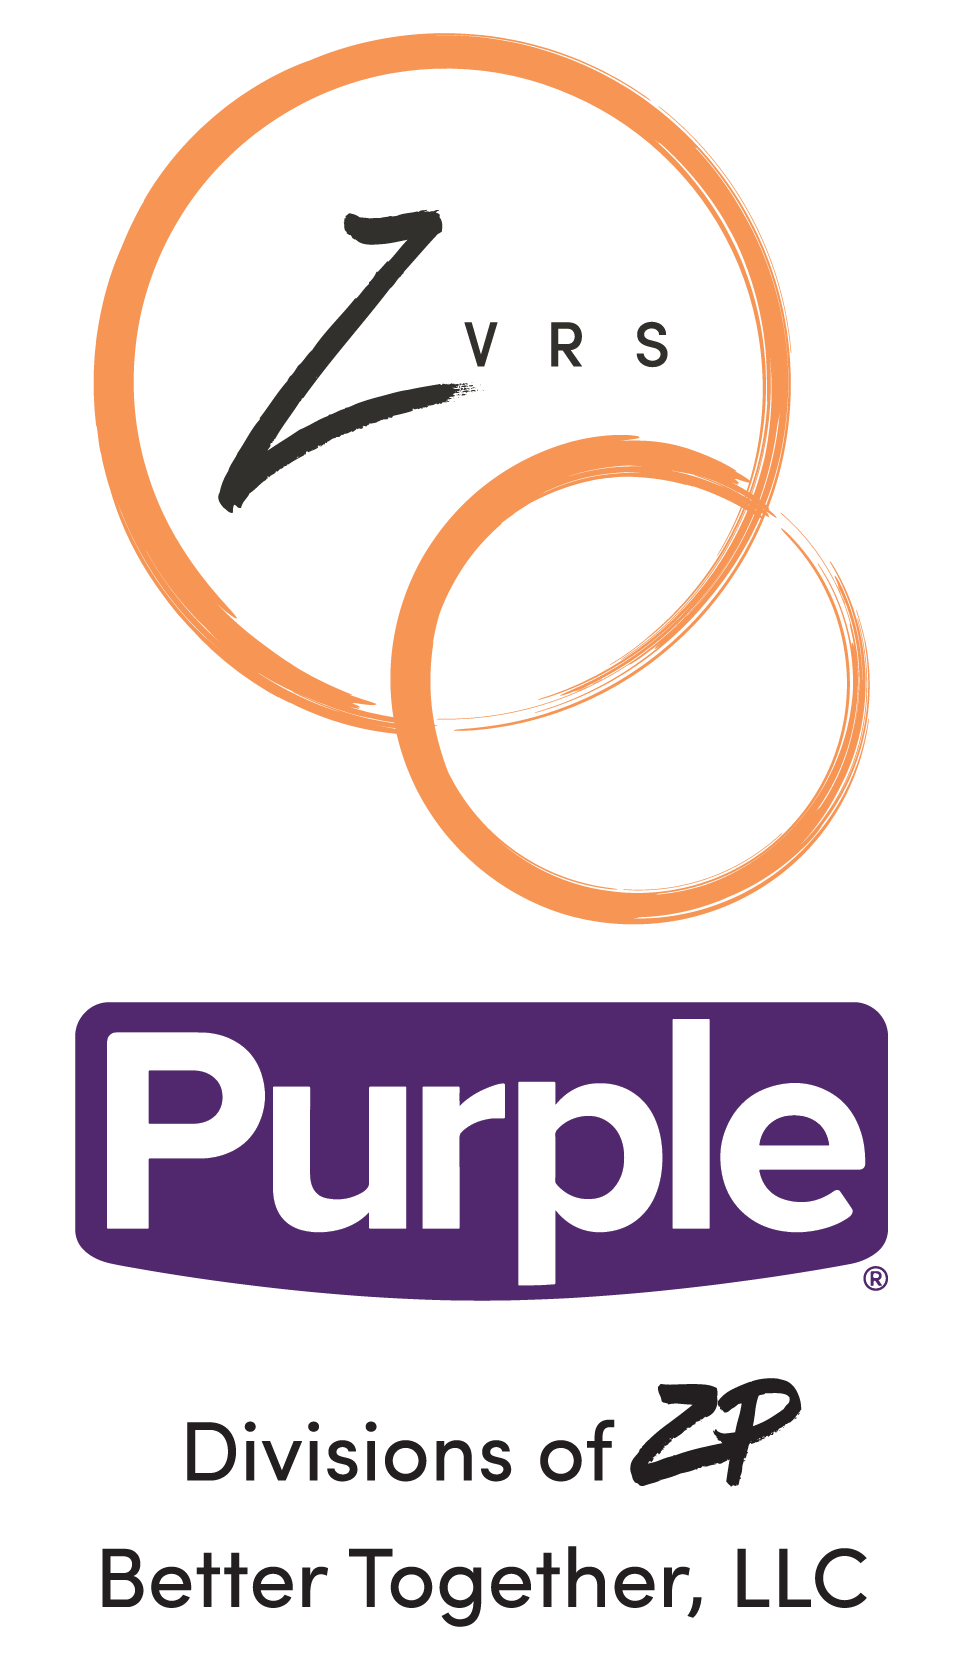 ZVRS Logo with Purple logo beneath